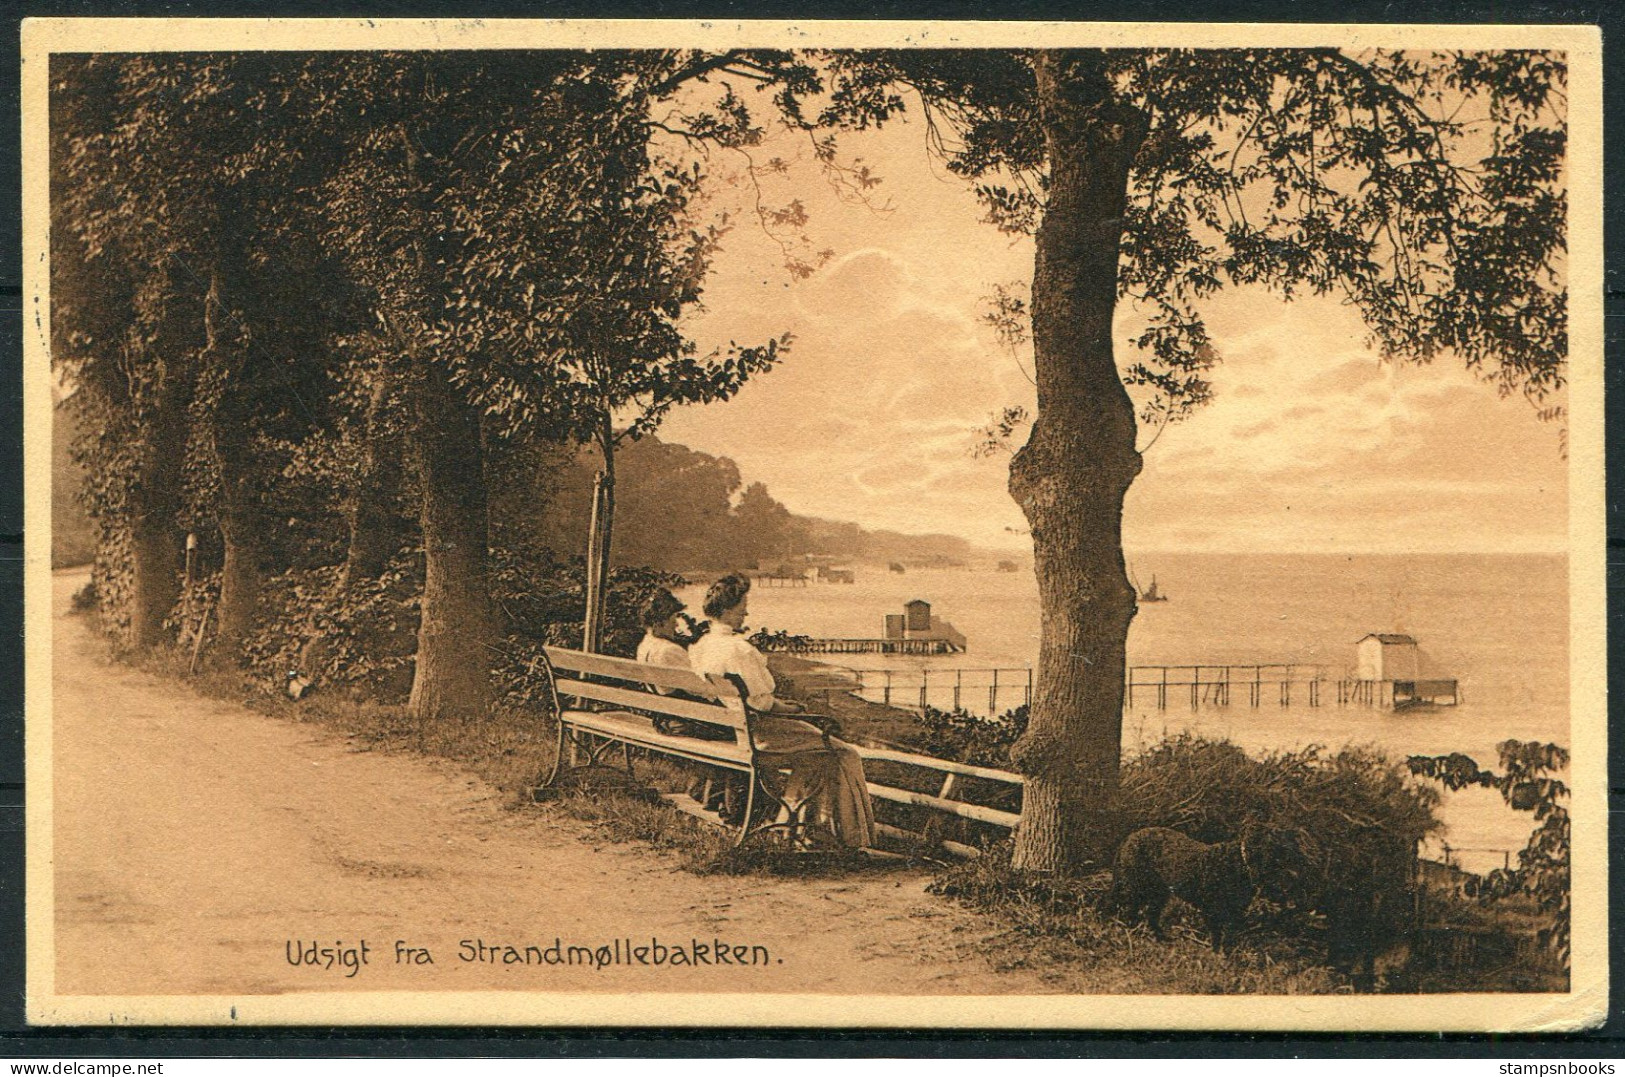 1911 Denmark Postcard - Sweden Malmo Boxed "Fran Danmark" Paquebot - Briefe U. Dokumente